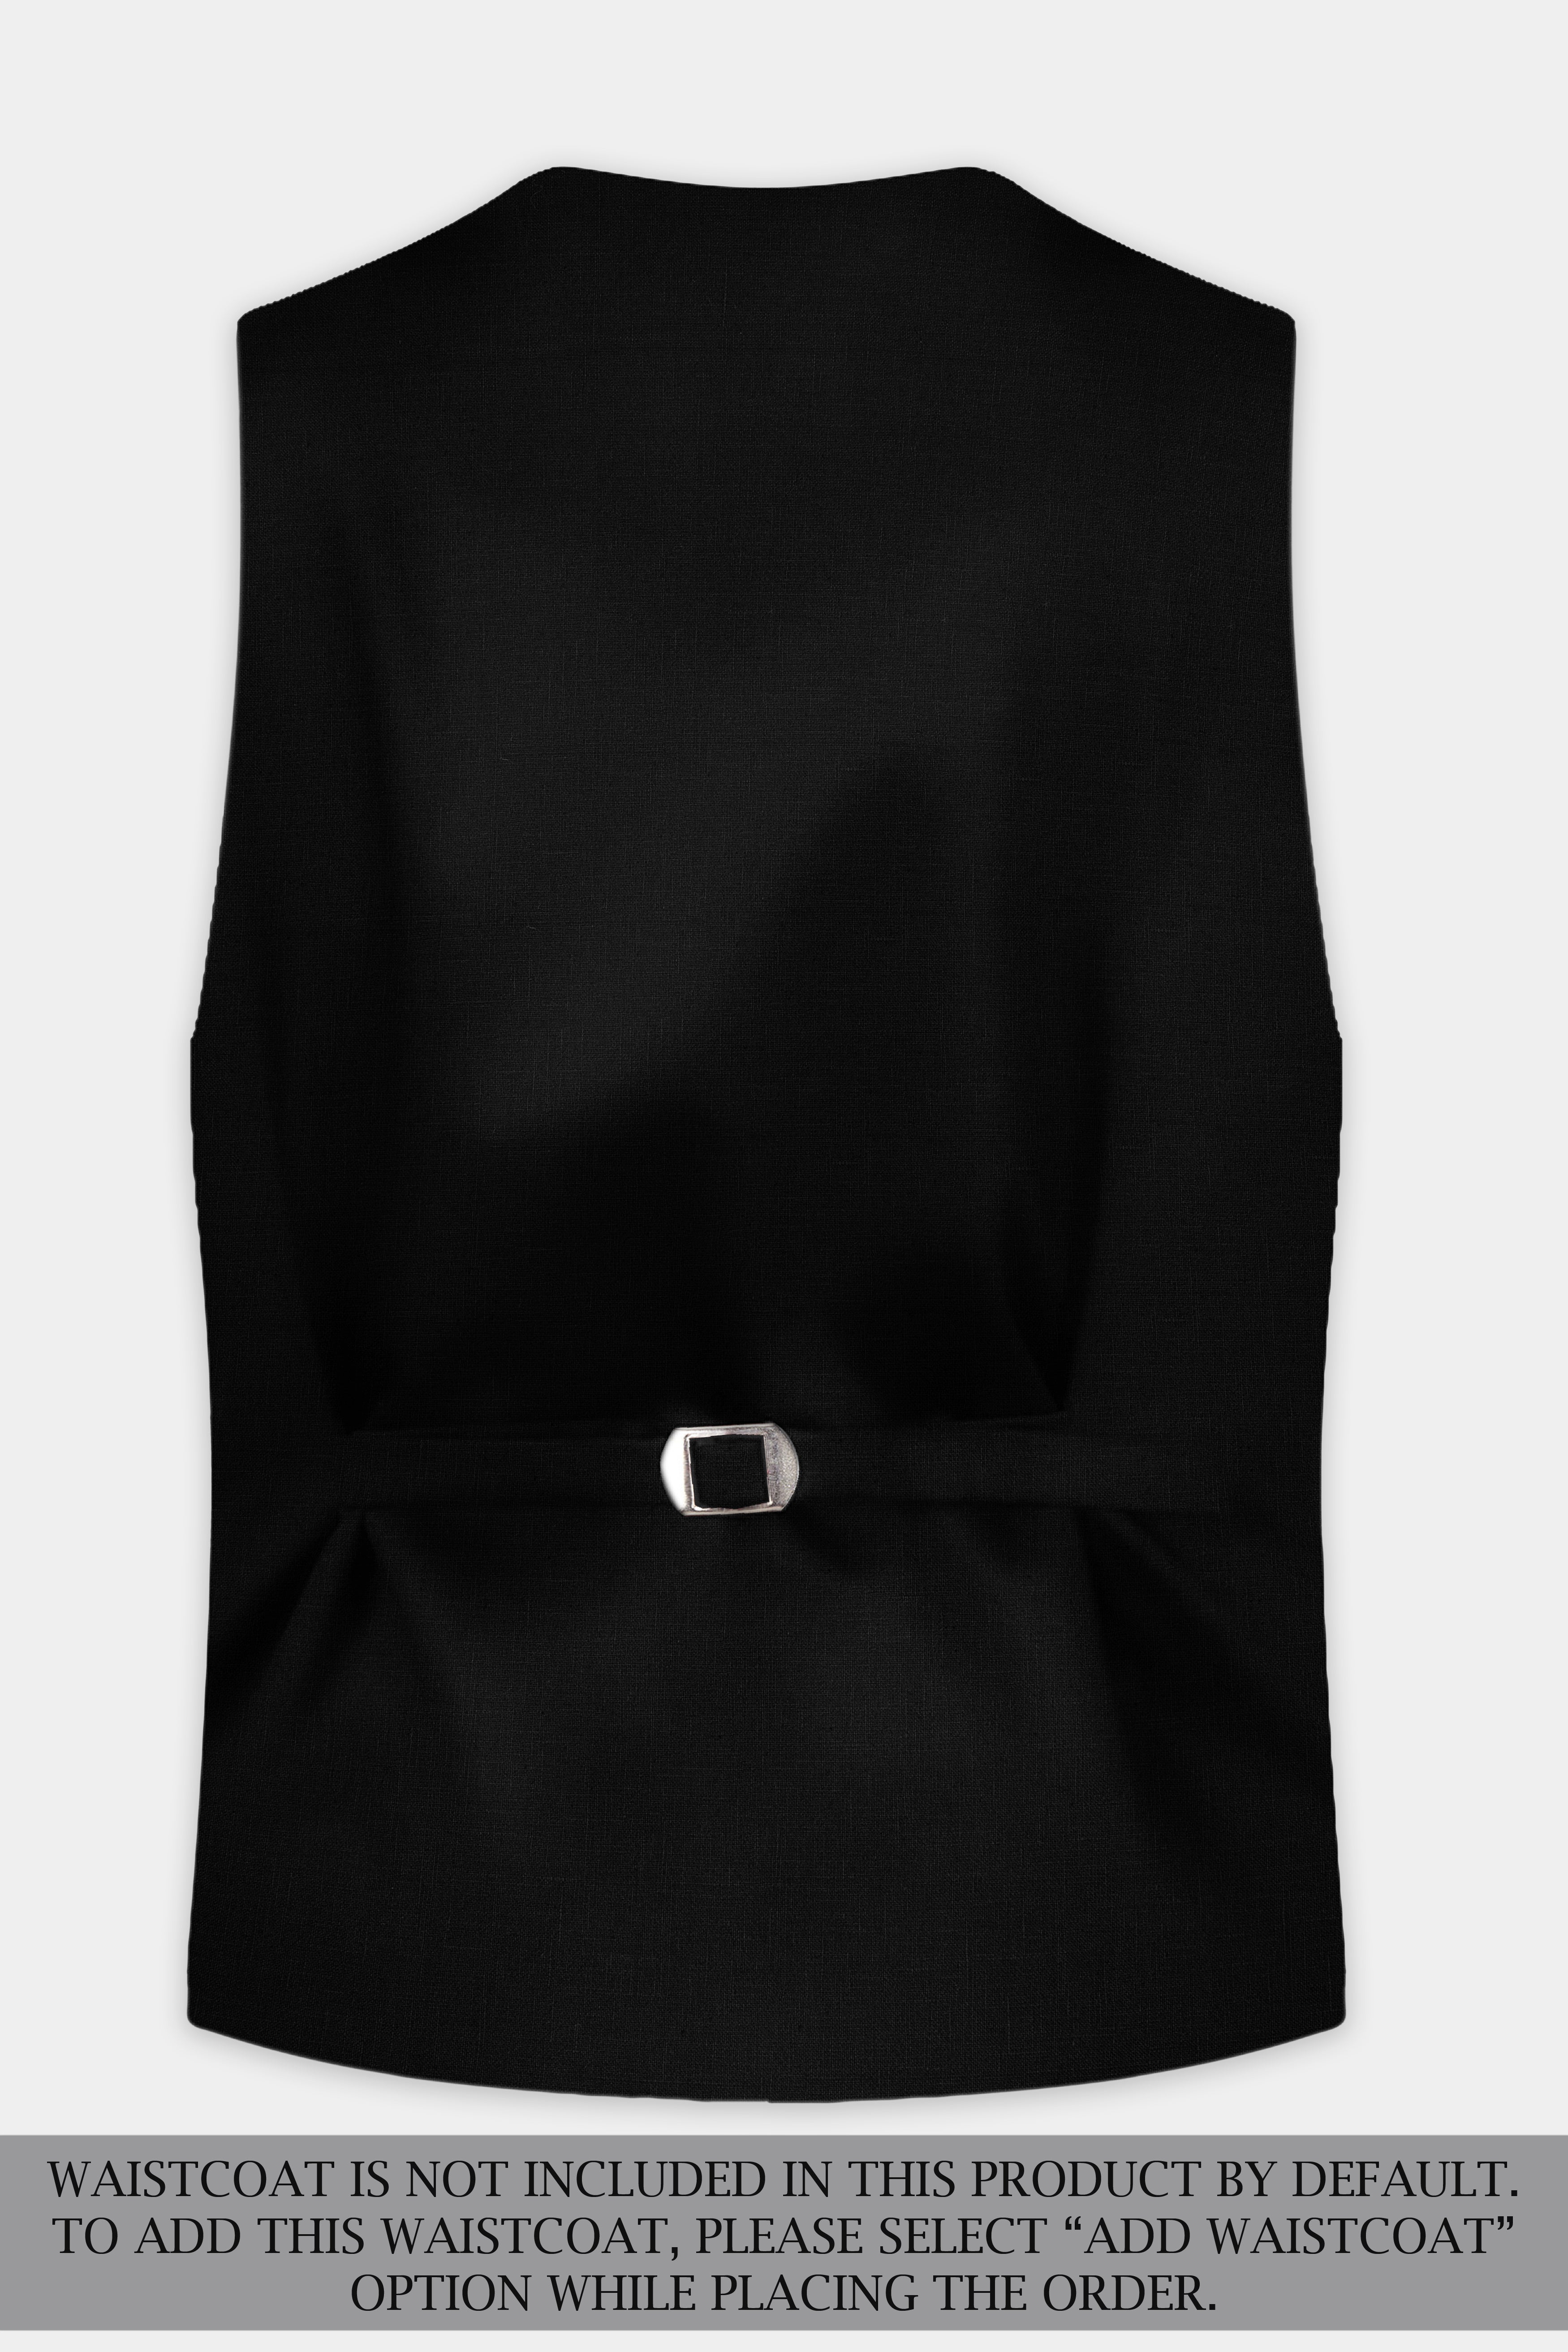 Jade Black Solid Double Breasted Tweed Suit